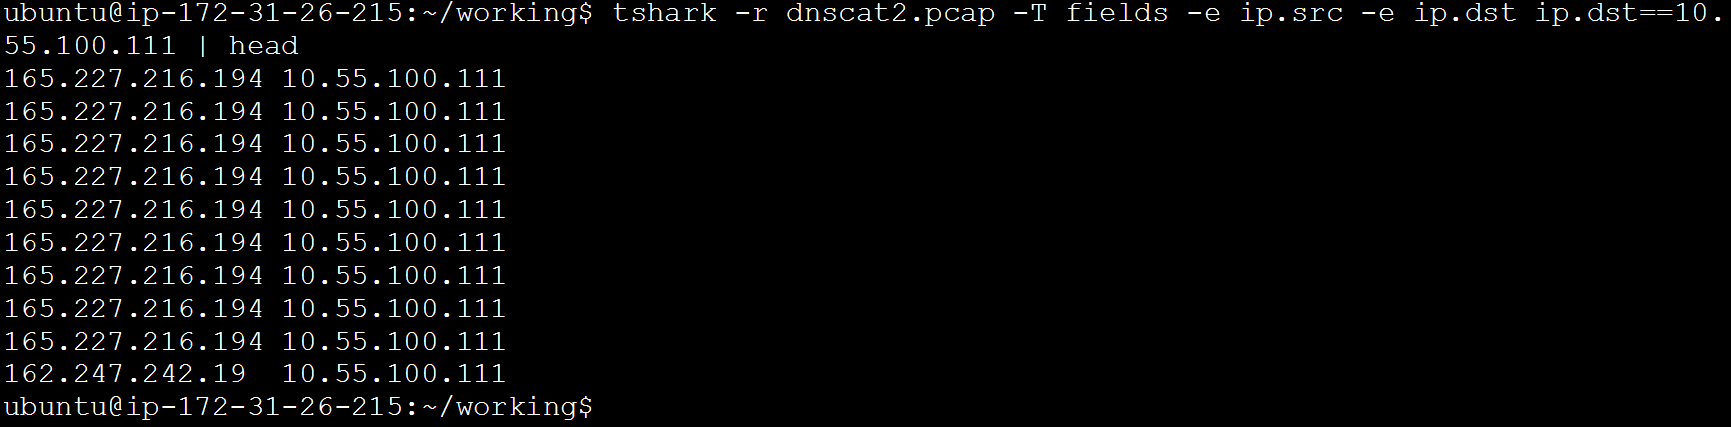 tshark command line examples